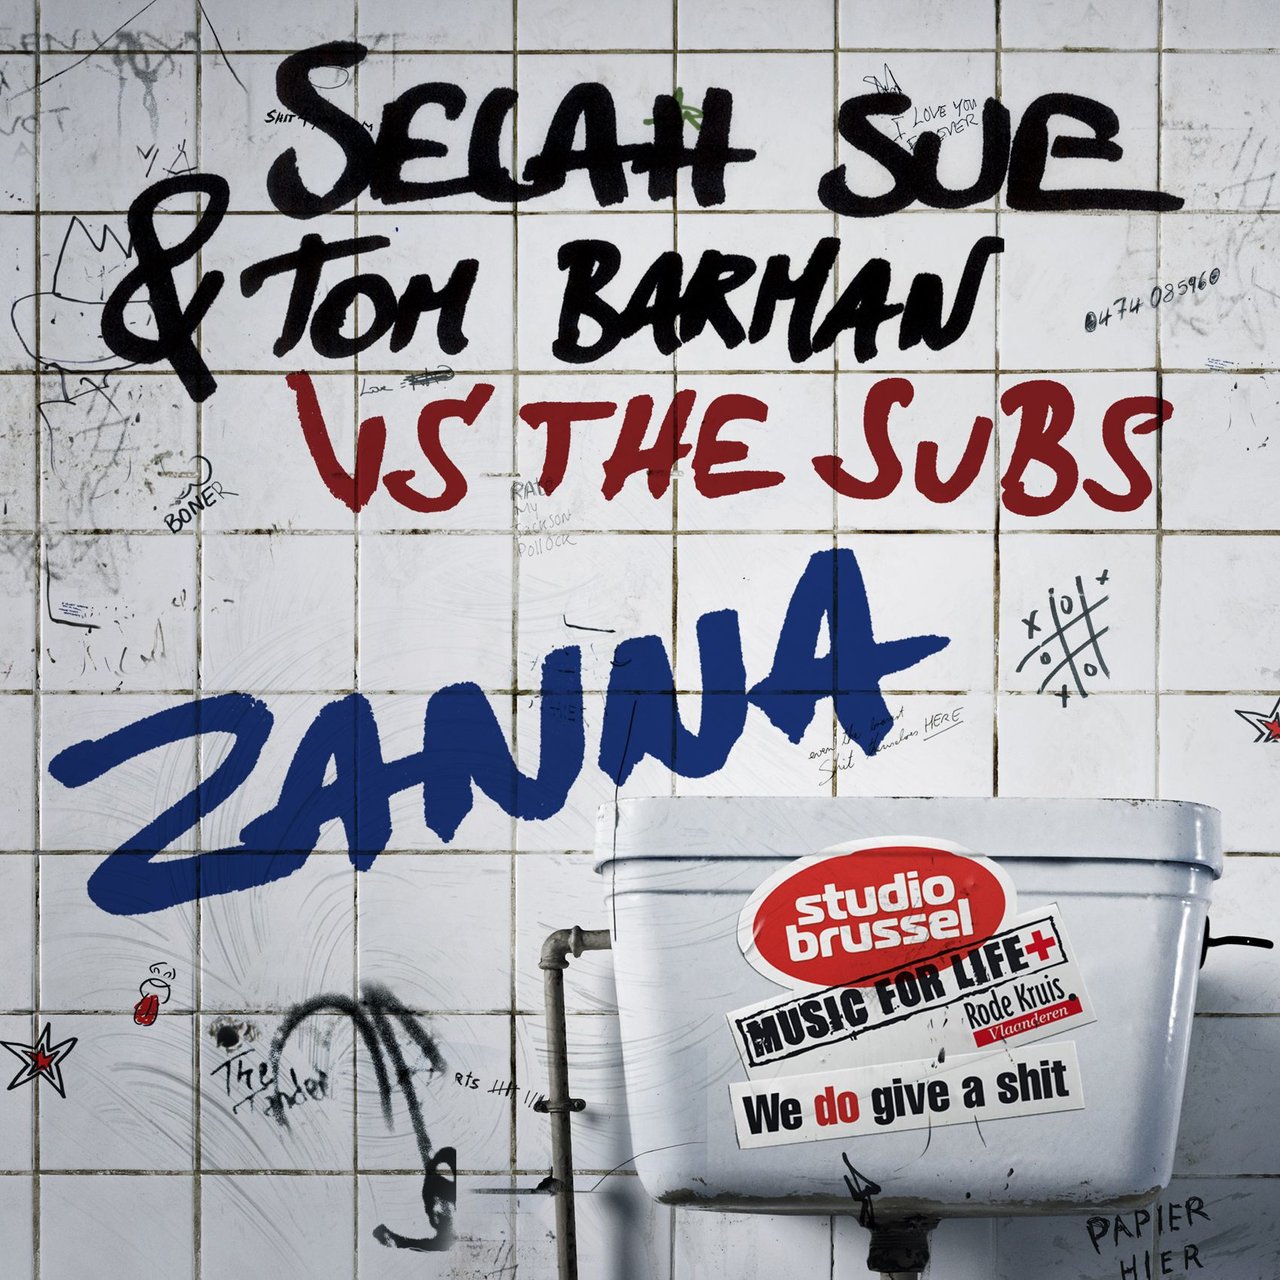 Selah Sue & Tom Barman featuring The Subs — Zanna cover artwork